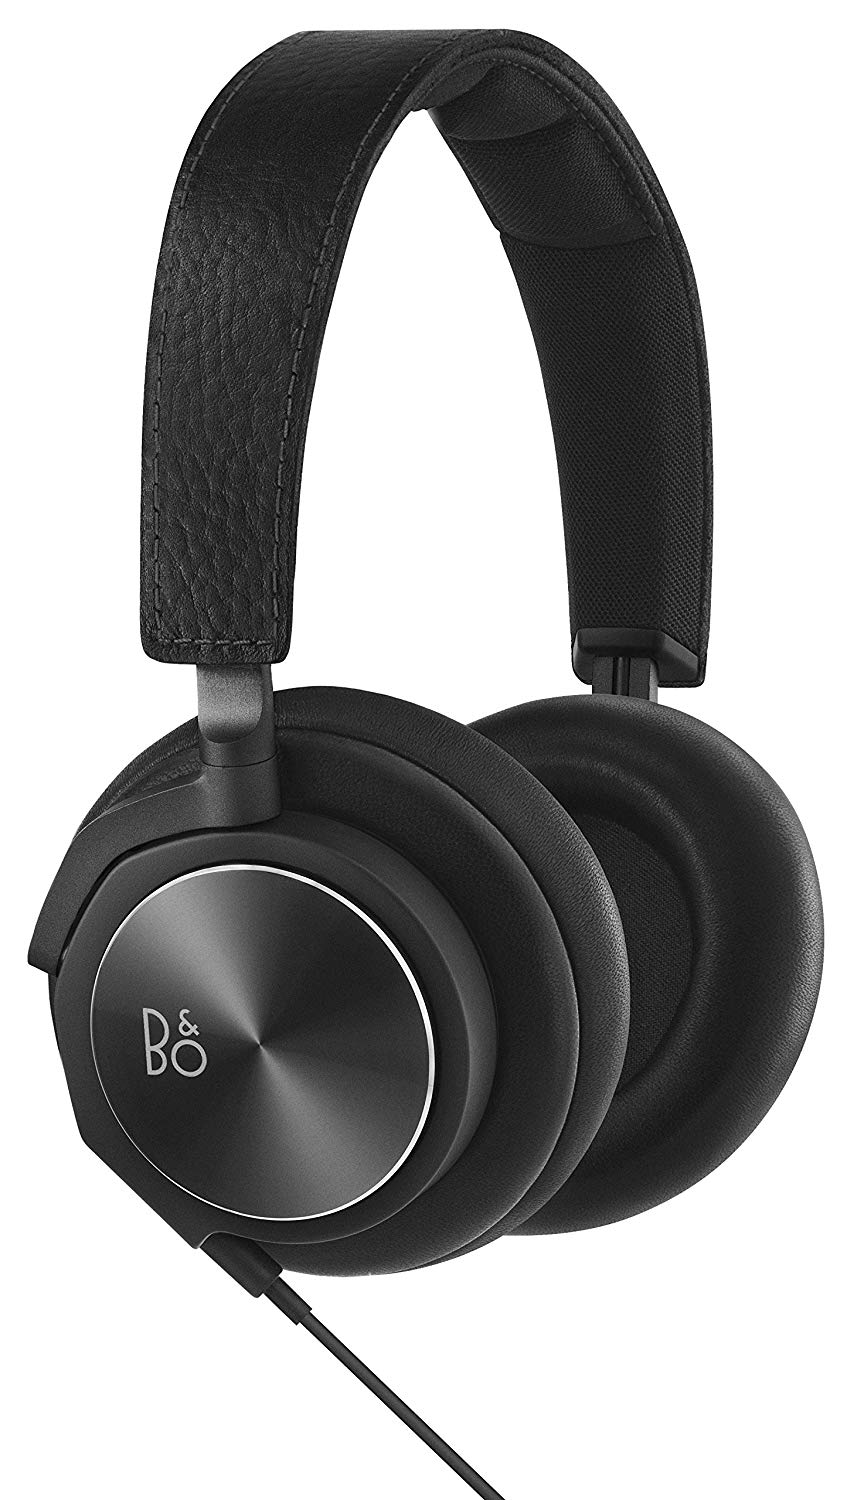 Bang & Olufsen Beoplay H6 Over-Ear Headphones - Black